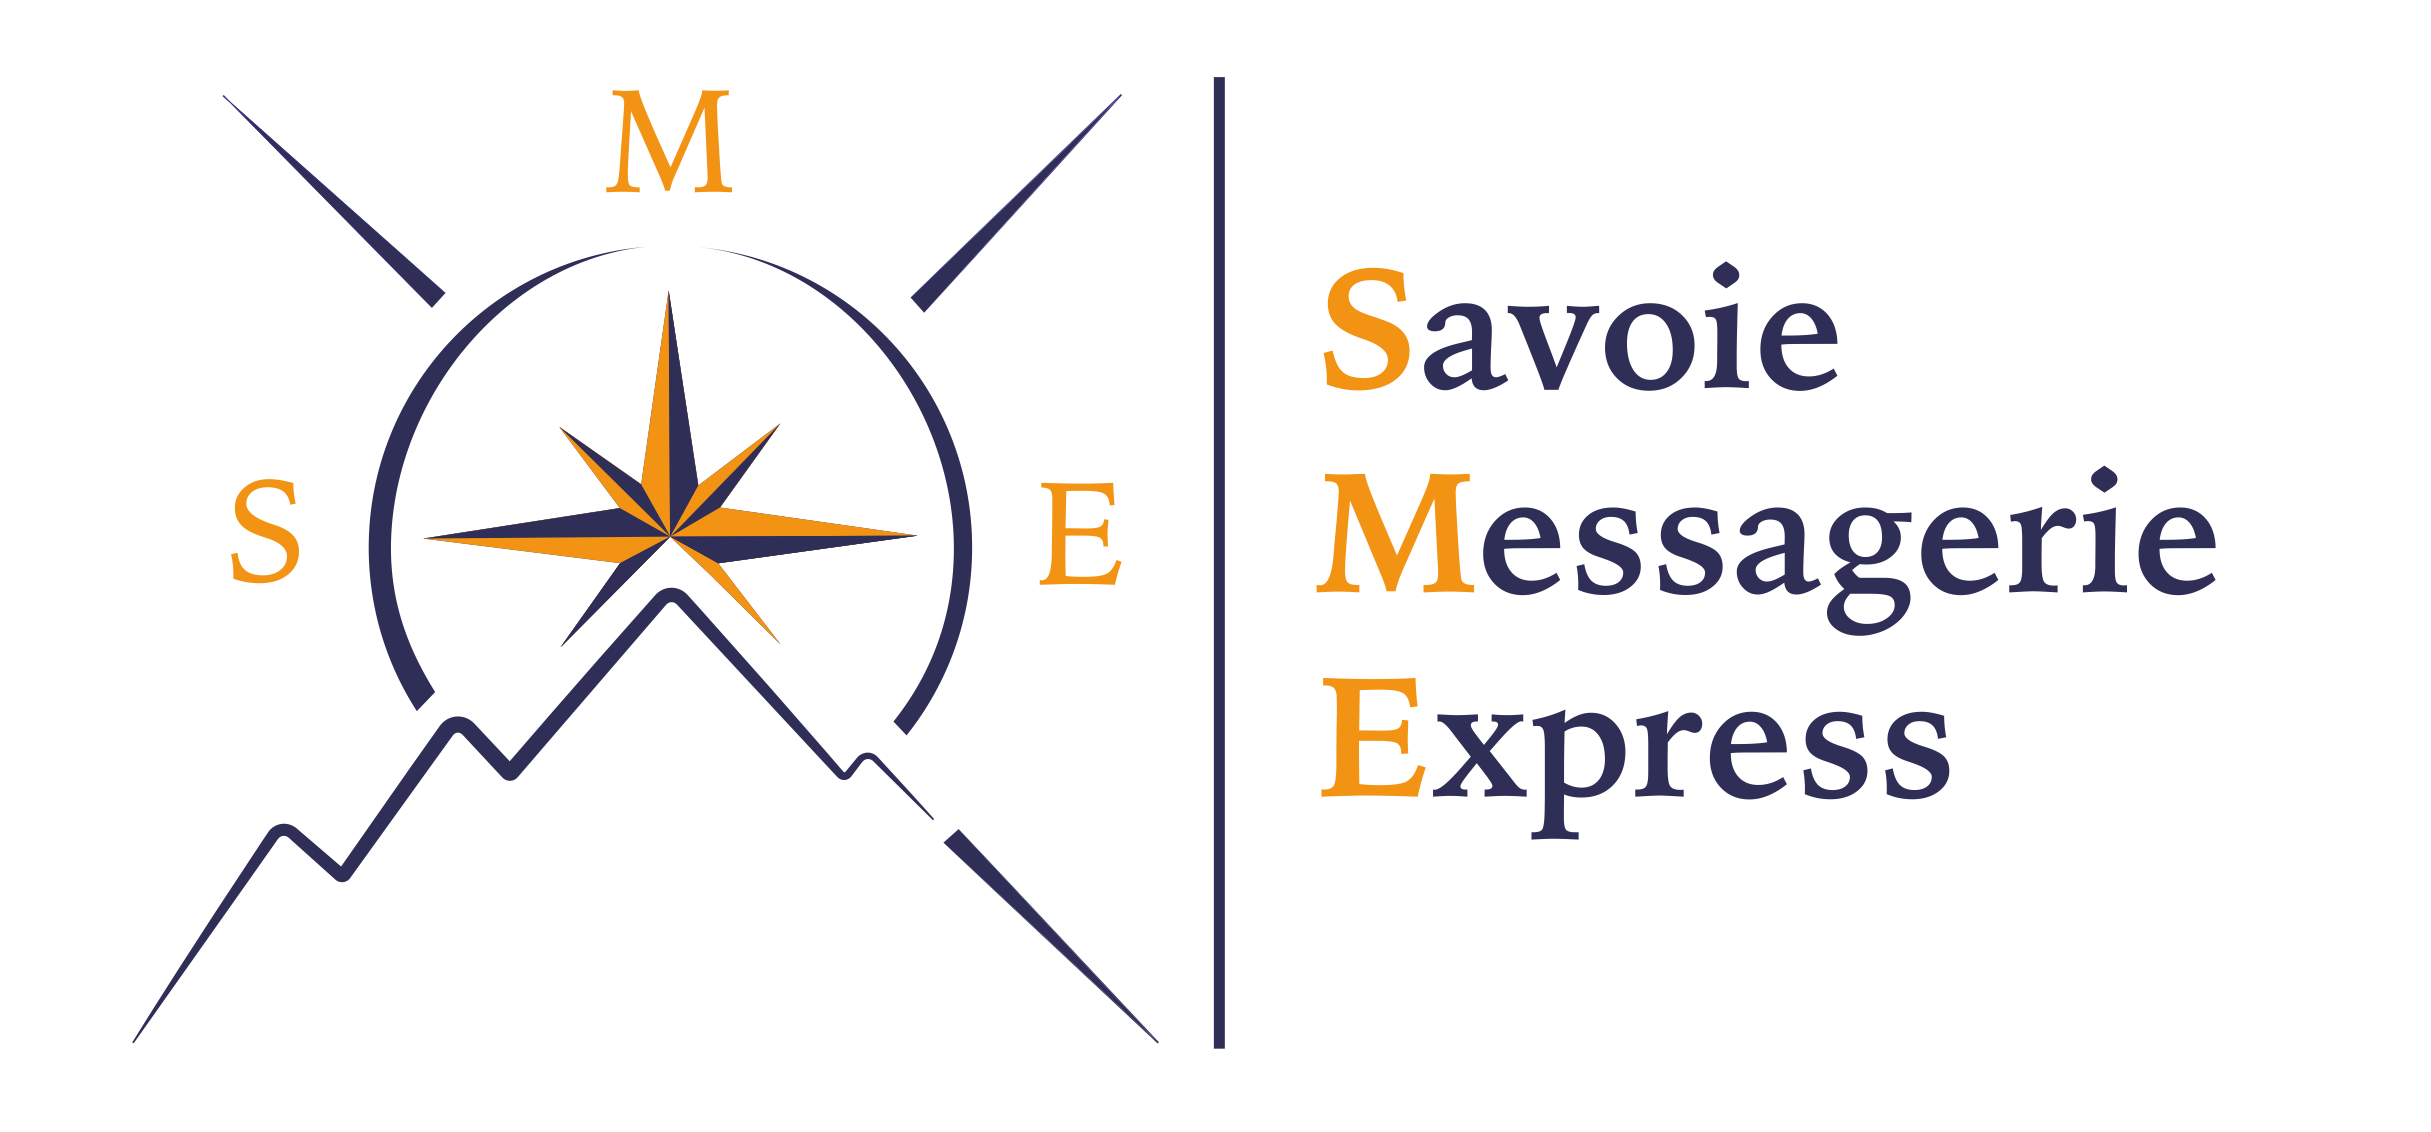 Savoie Messagerie Express